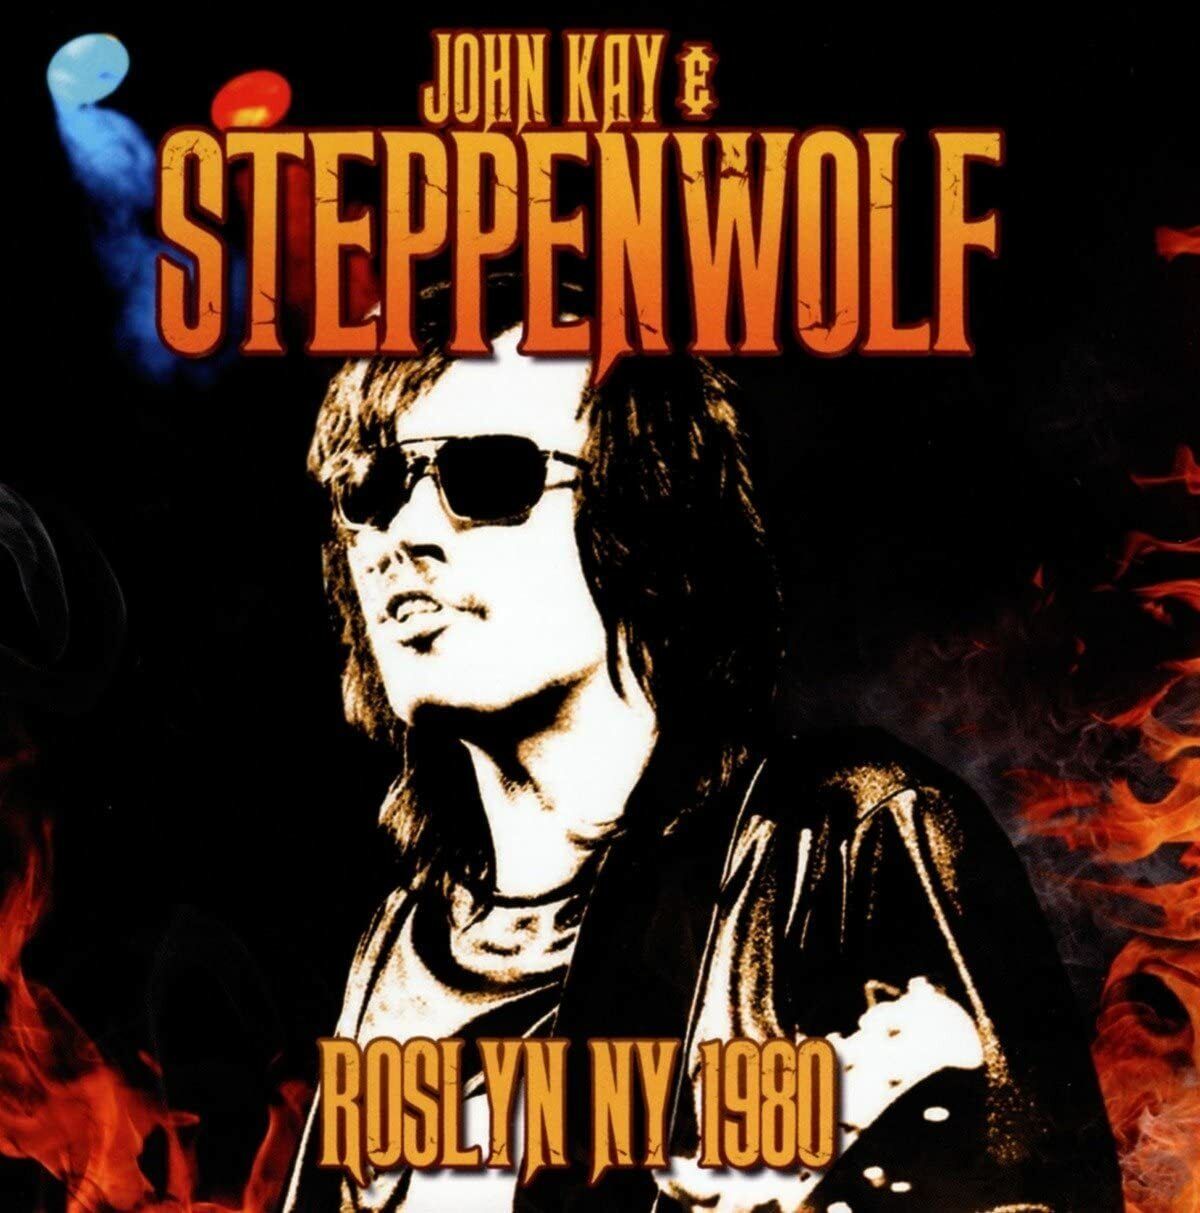 John Kay & Steppenwolf - Roslyn NY 1980 (2016)  CD  NEW/SEALED  SPEEDYPOST